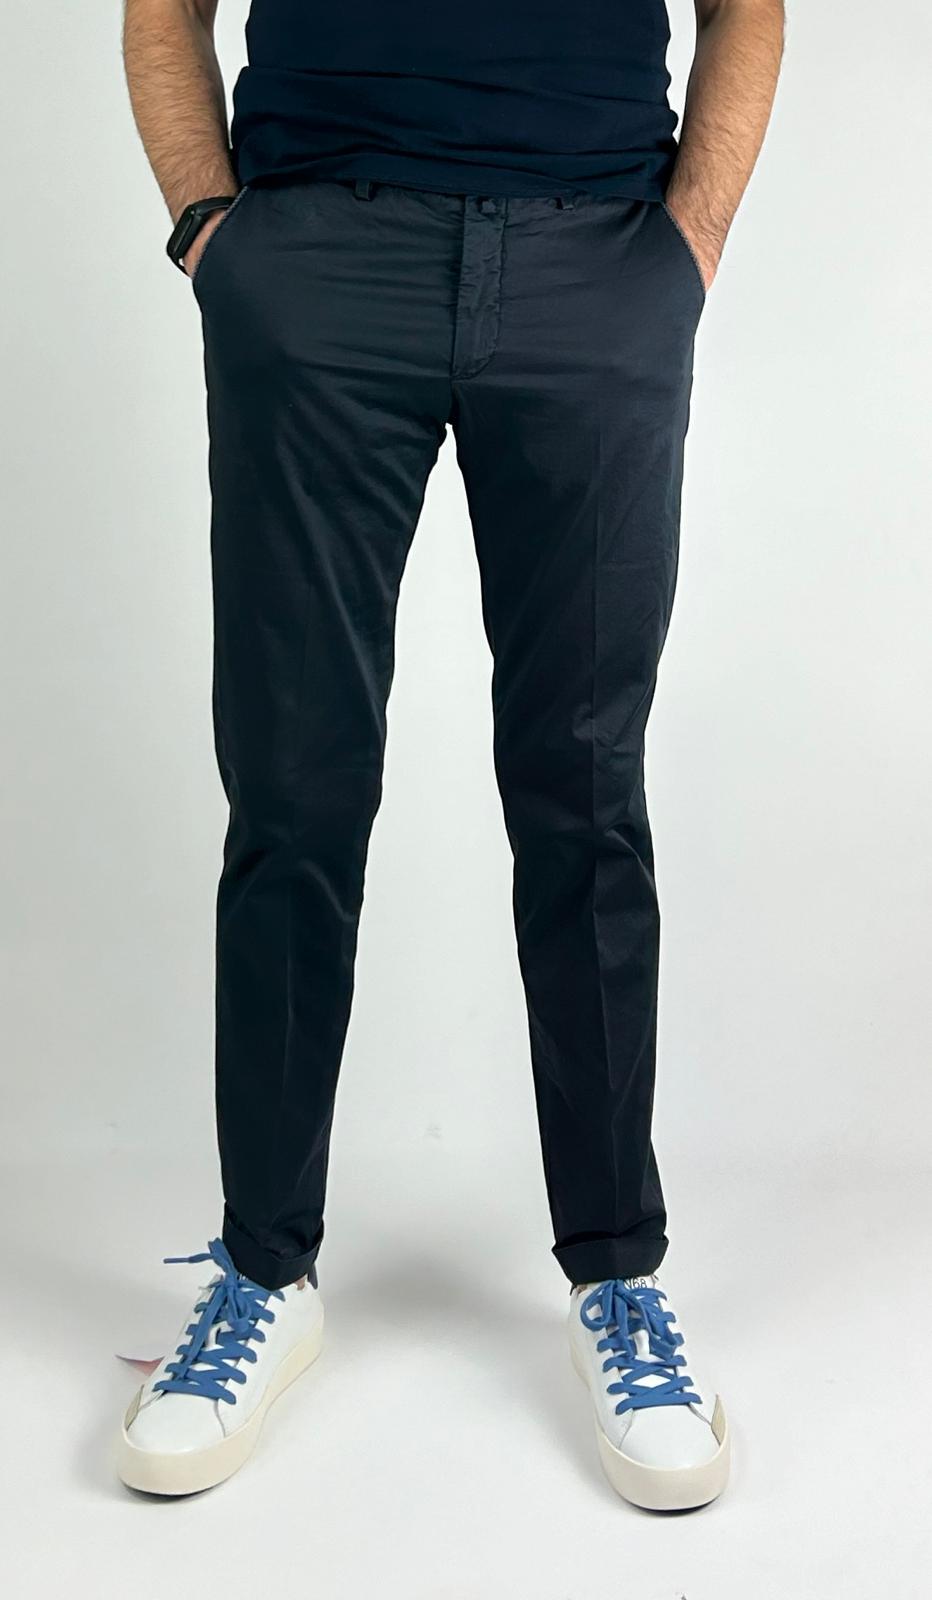 Pantalone Uomo B700-mod. MH712-5022